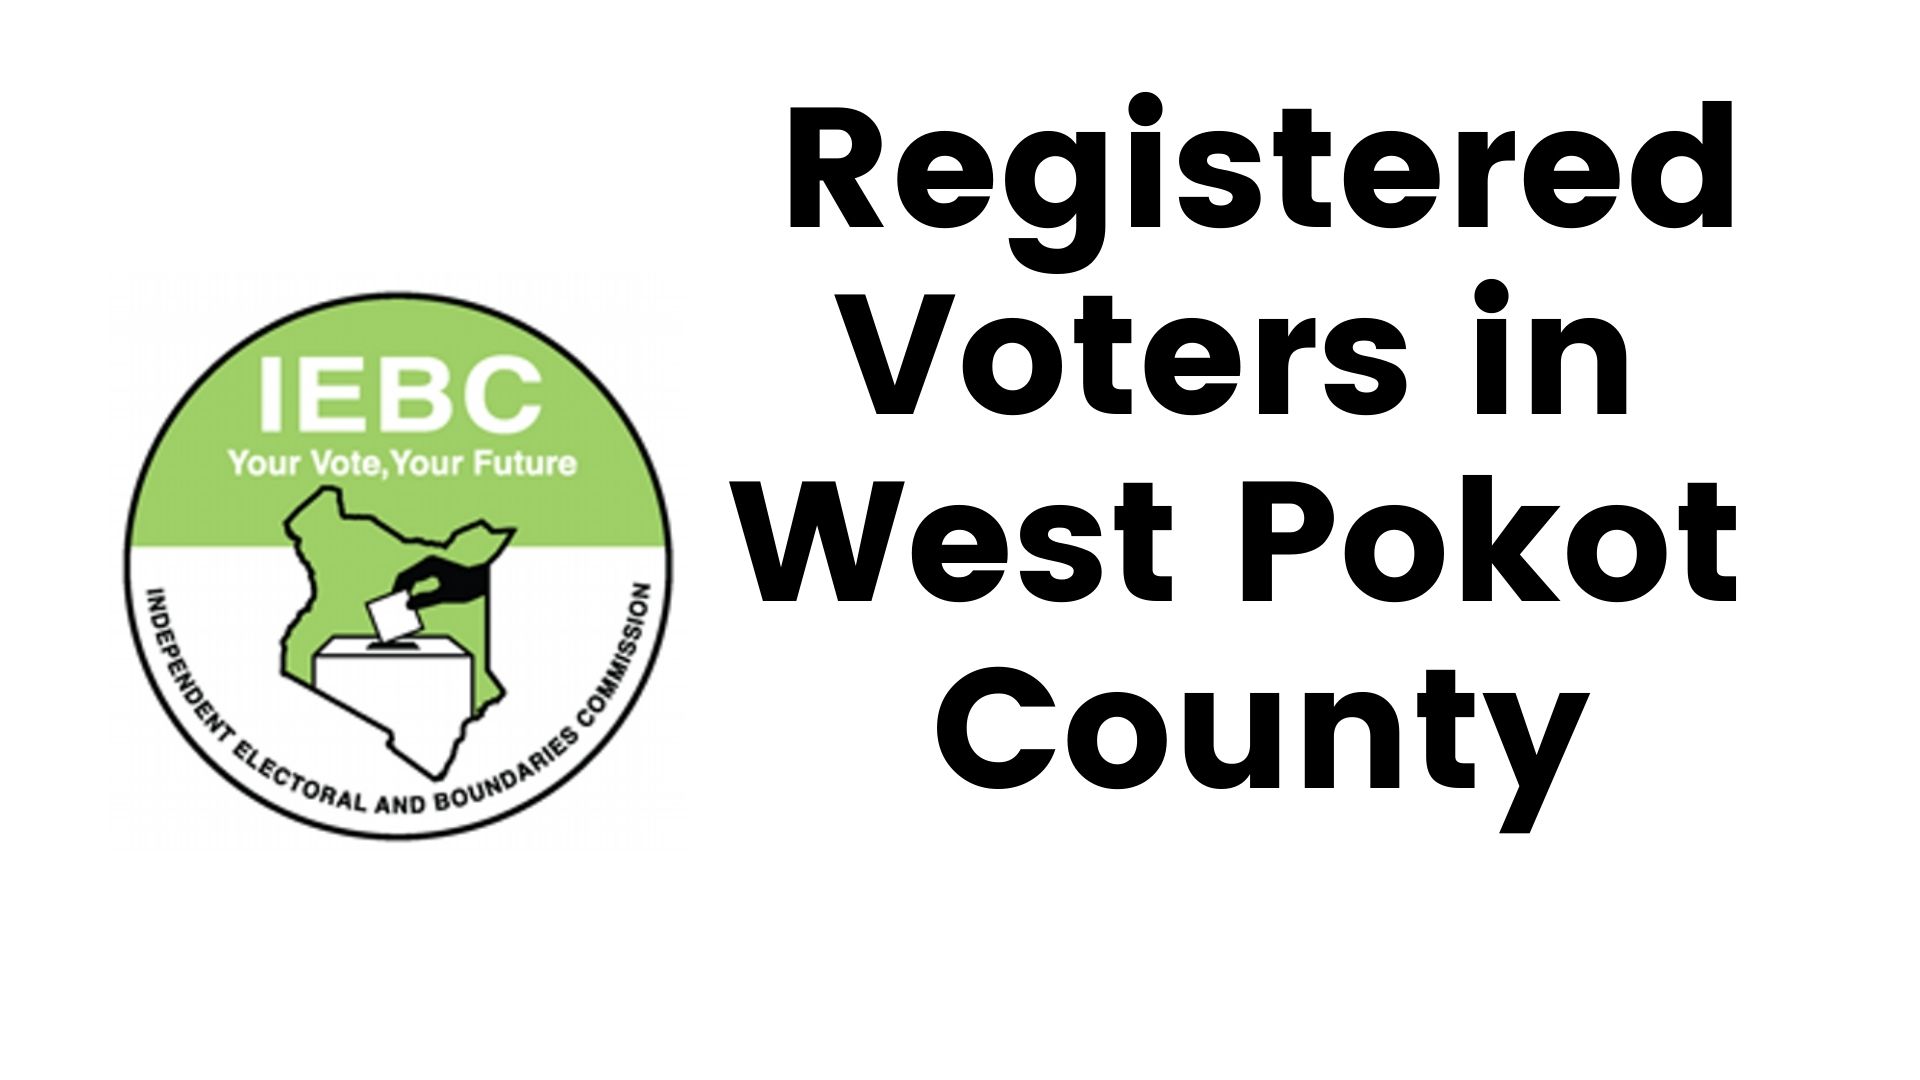 IEBC West Pokot County Registered Voters